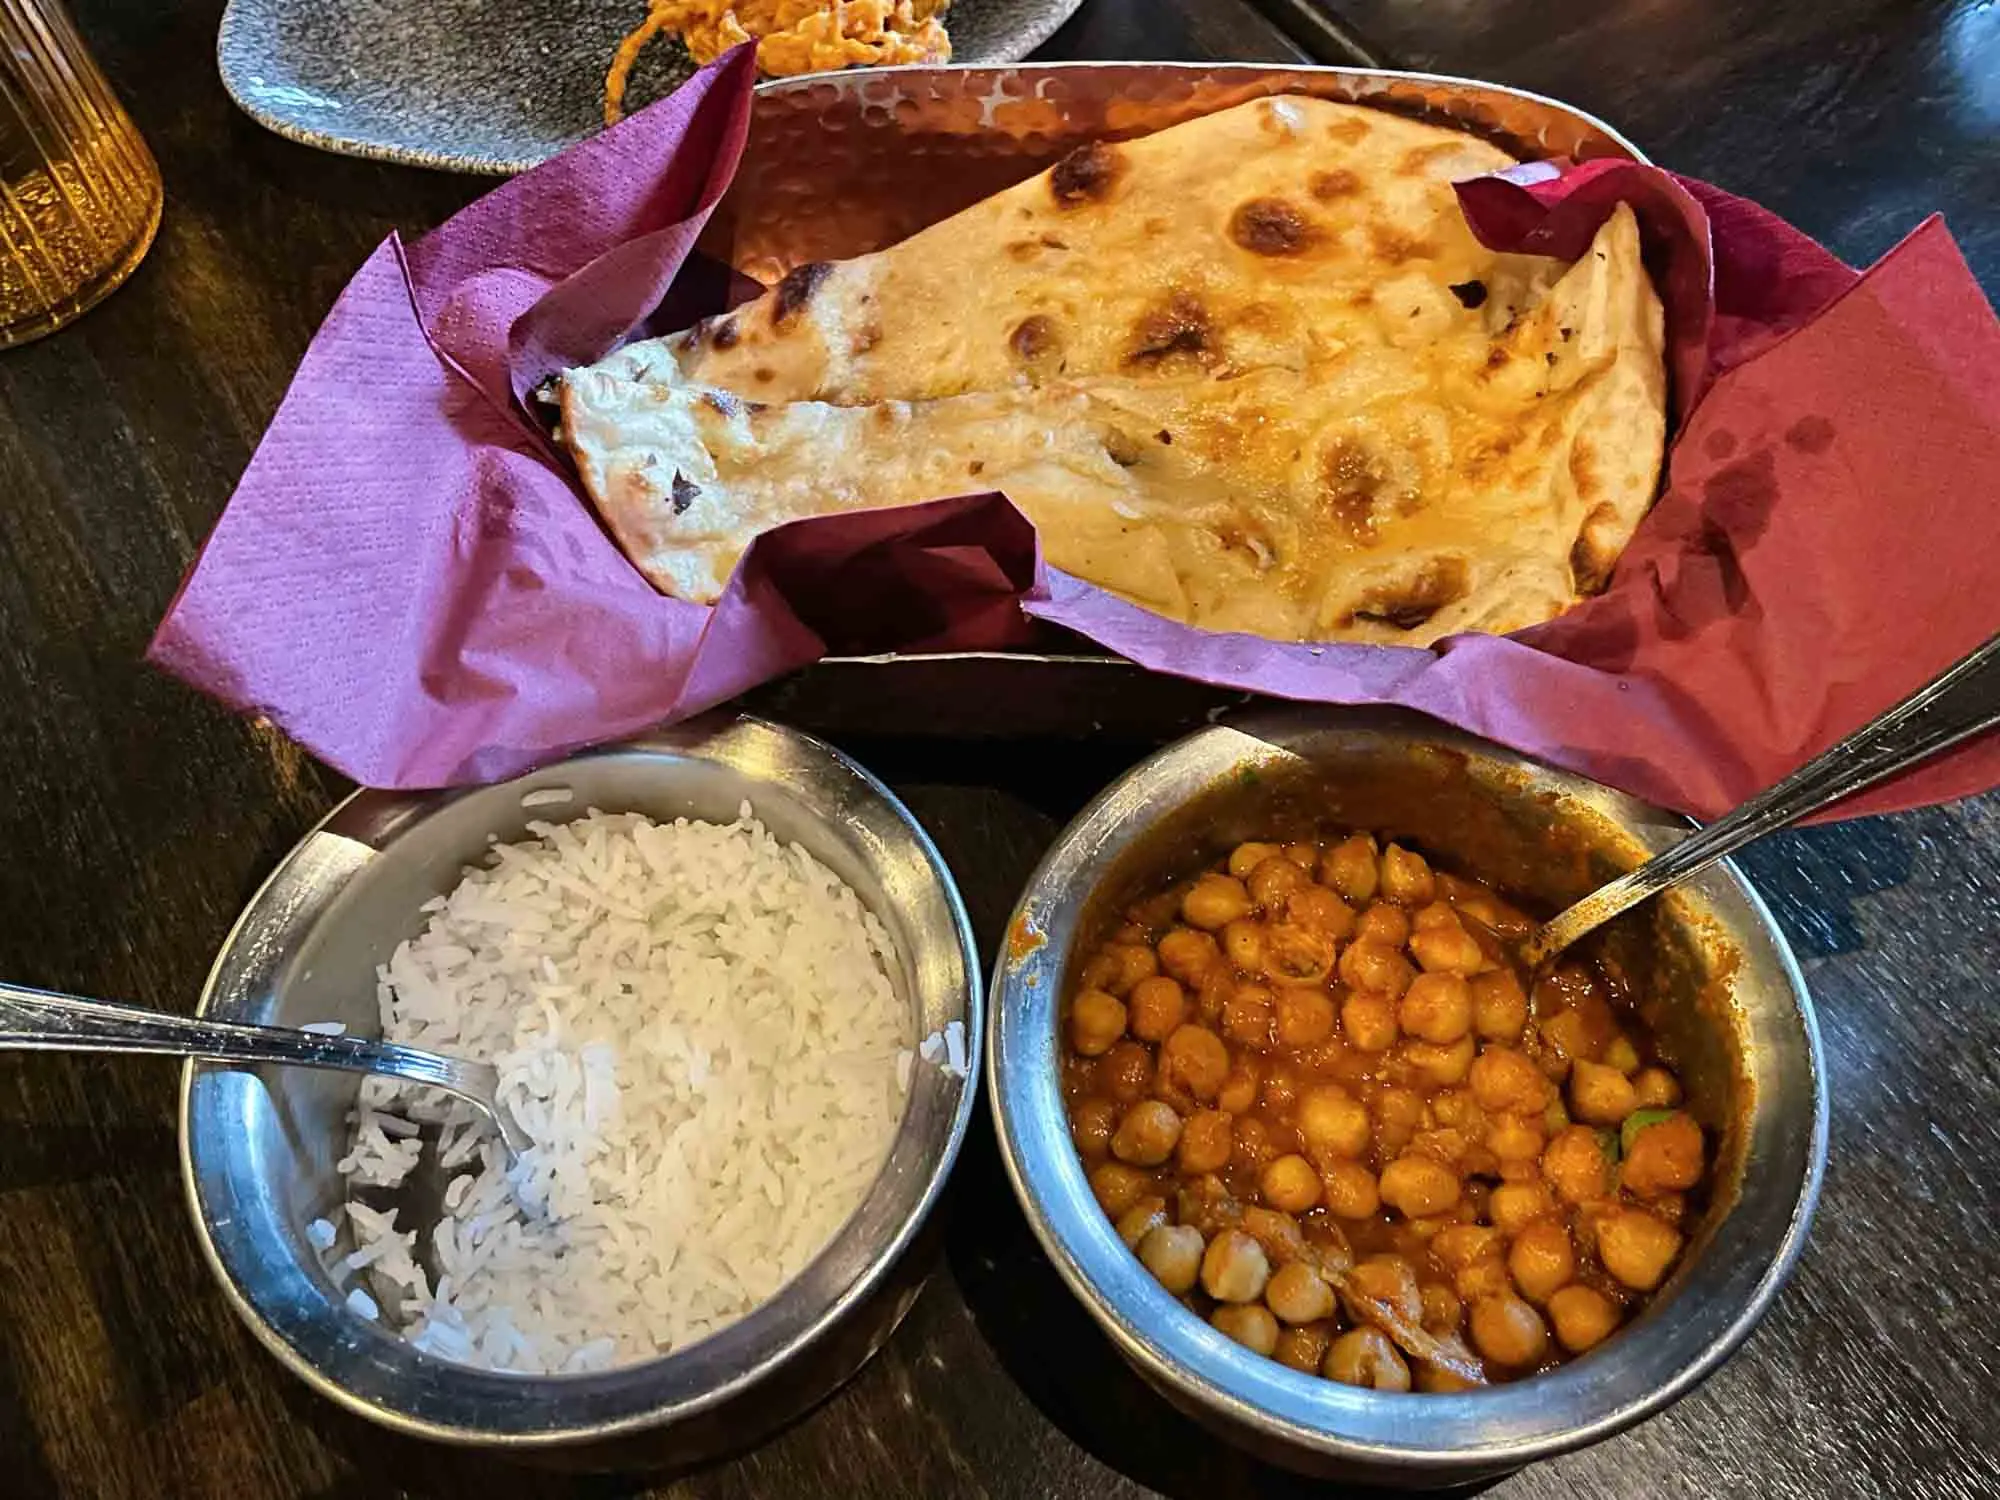 Tiffin bowls of chana masala, white rice, and naan bread